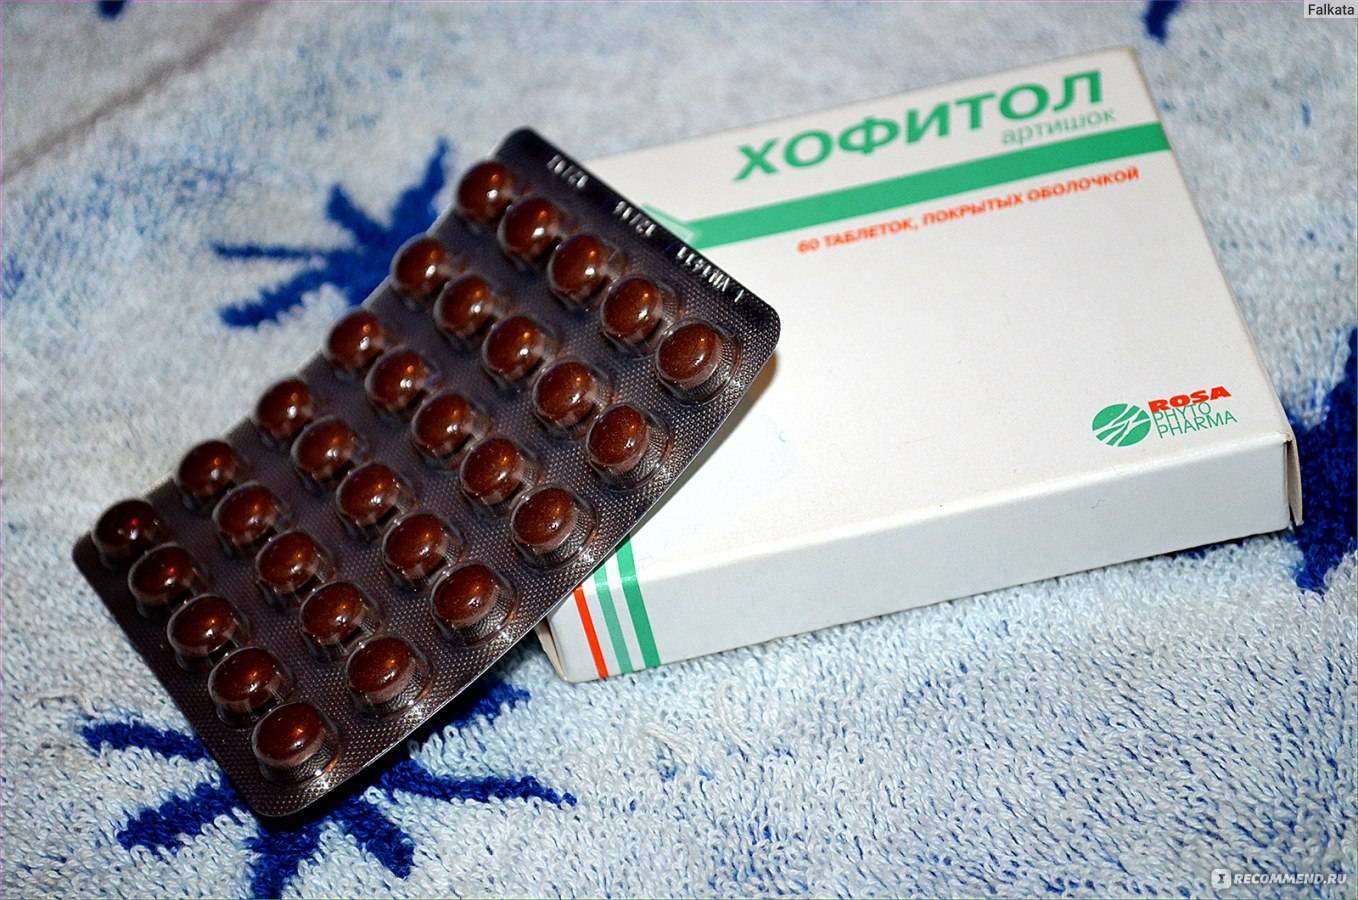 Желчегонные препараты хофитол